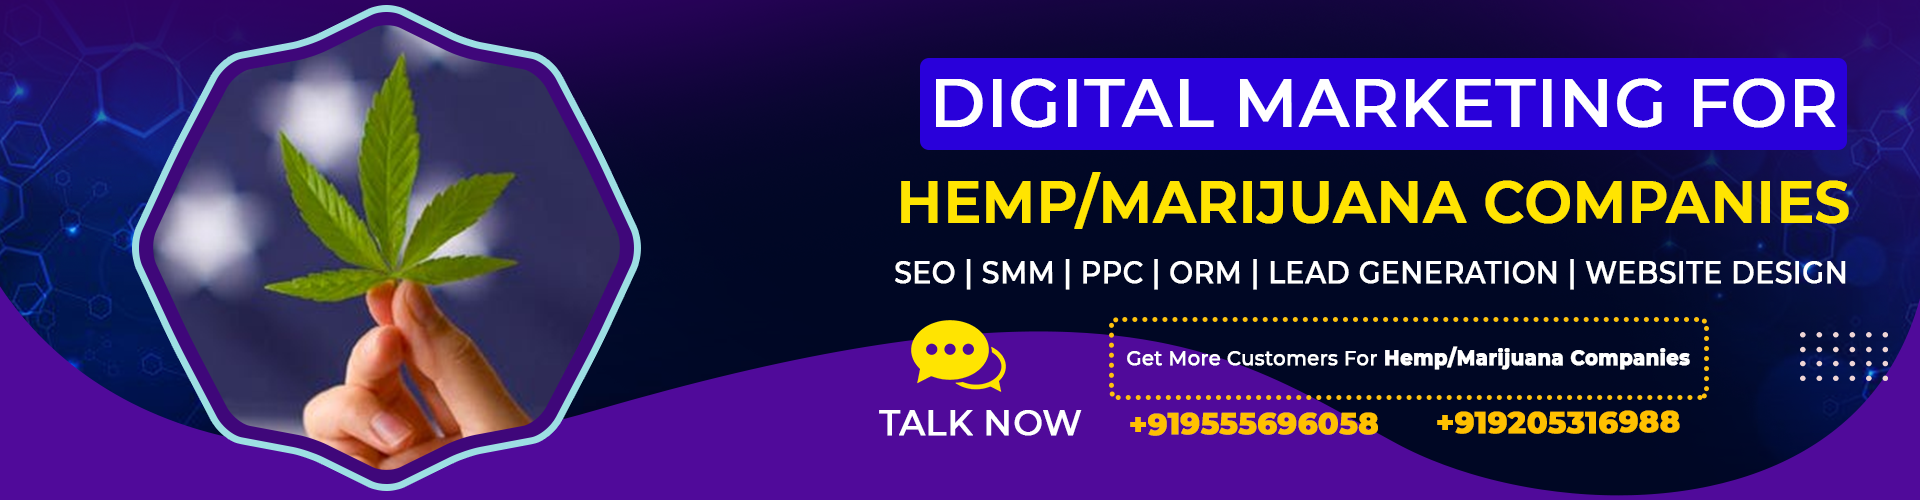 digital-marketing-for-hemp-marijuana-companies